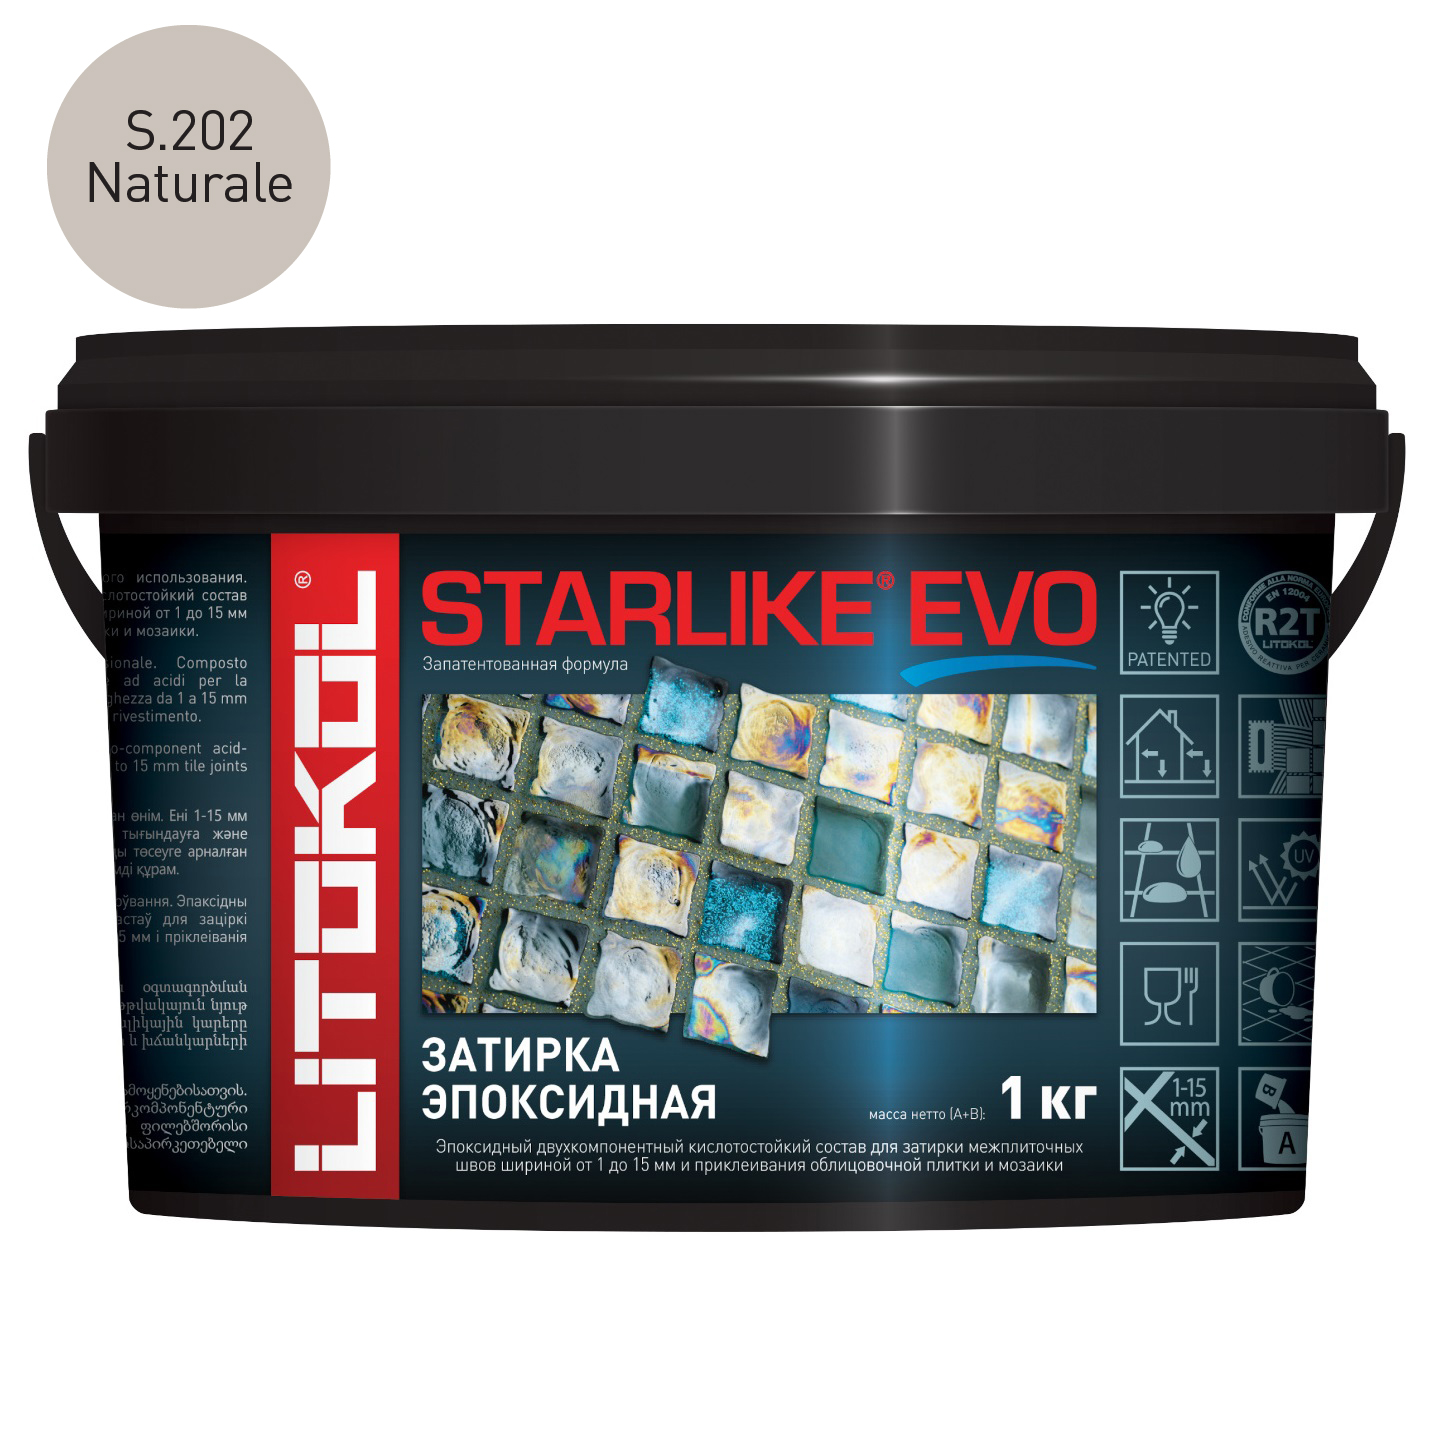 Затирка эпоксидная Litokol Starlike Evo S.202 Naturale (1 кг.)